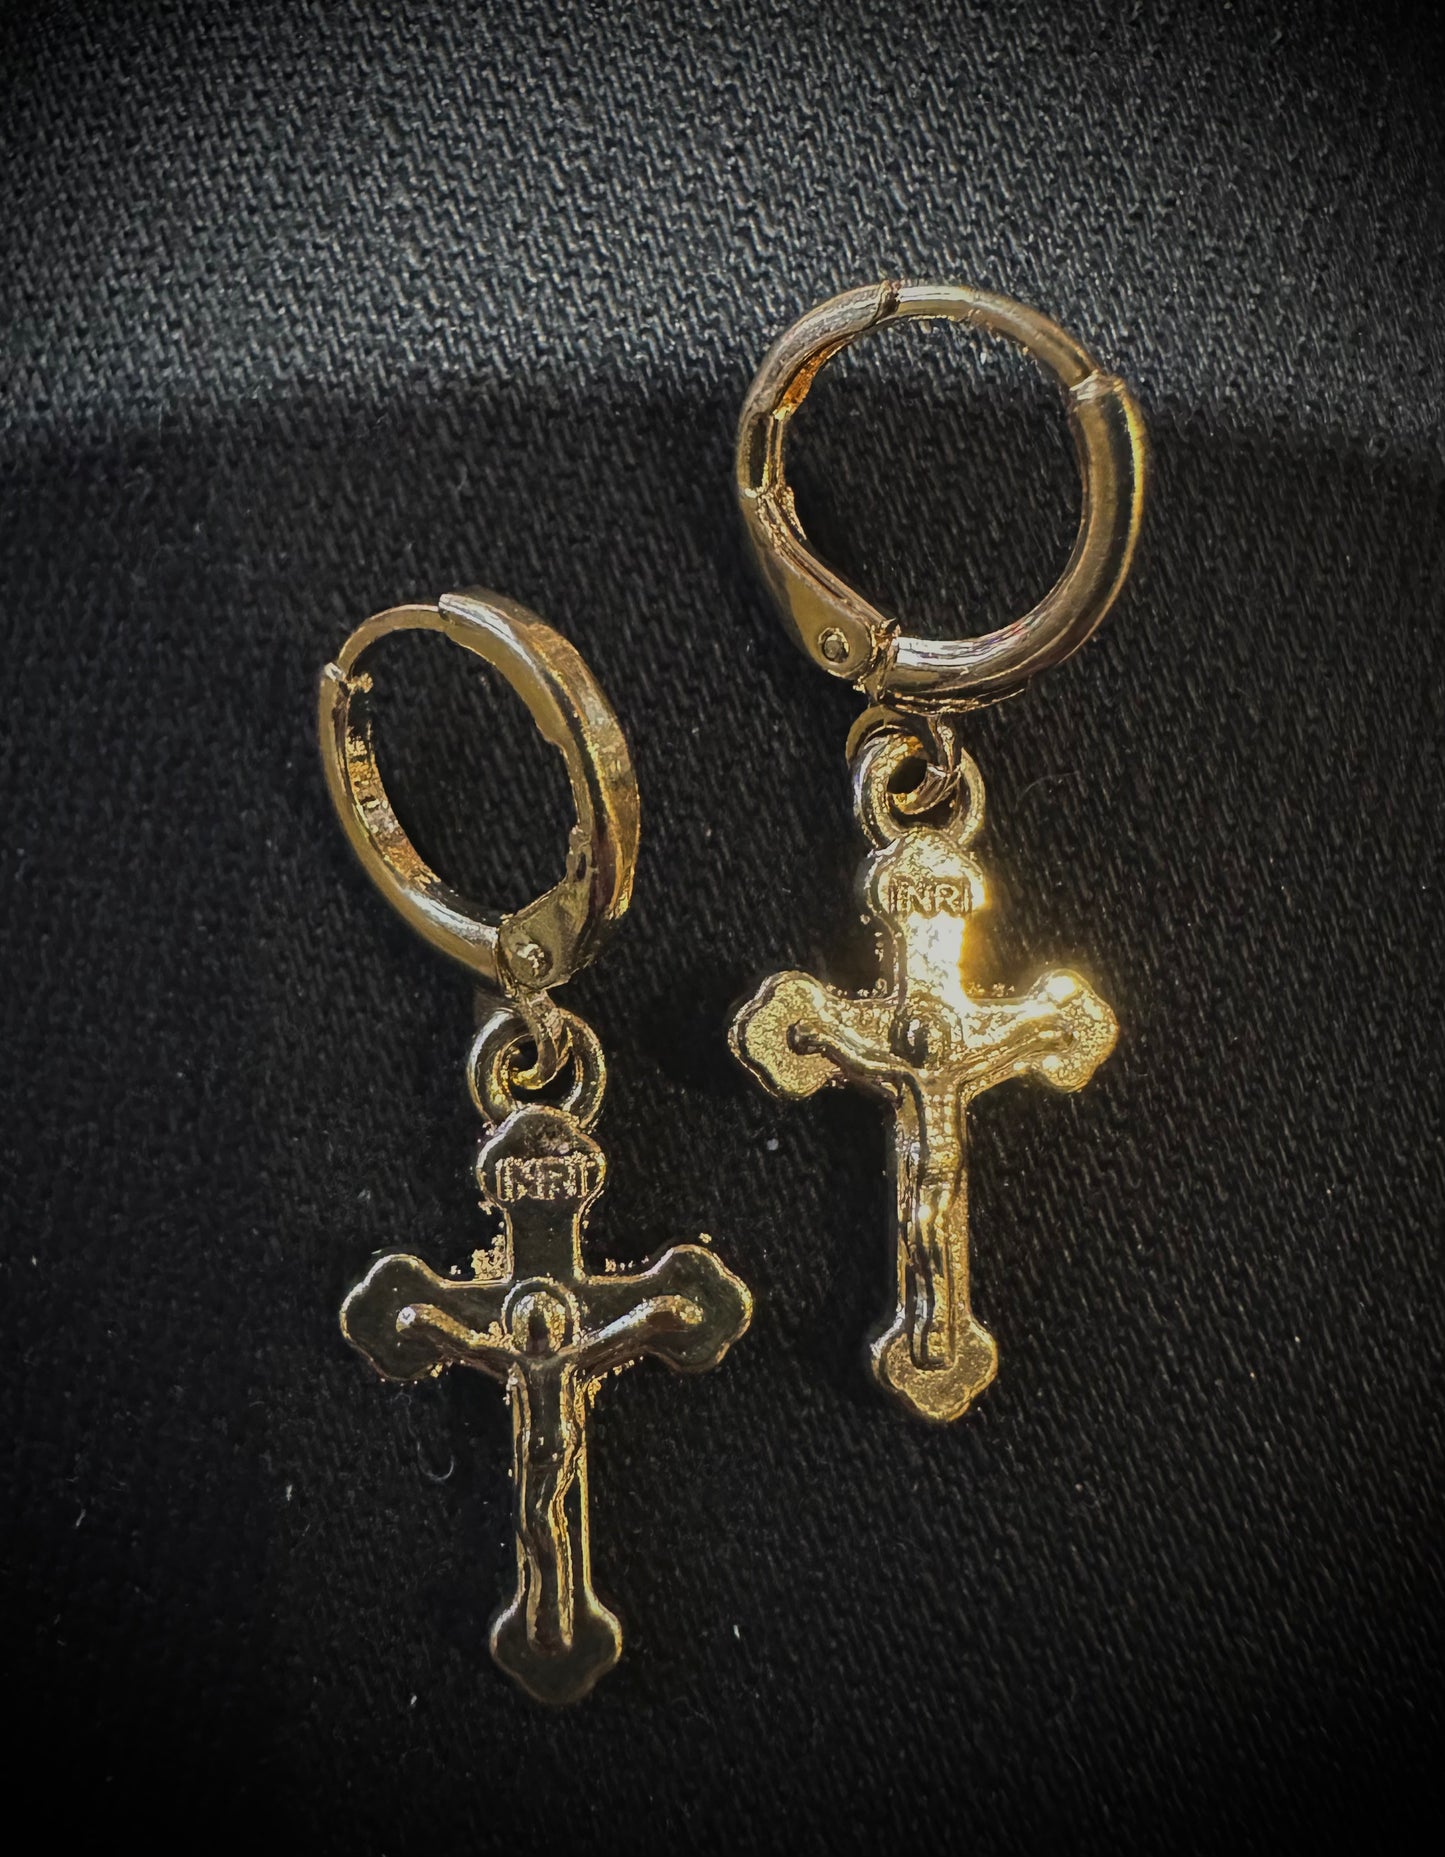 Small crucifix earrings